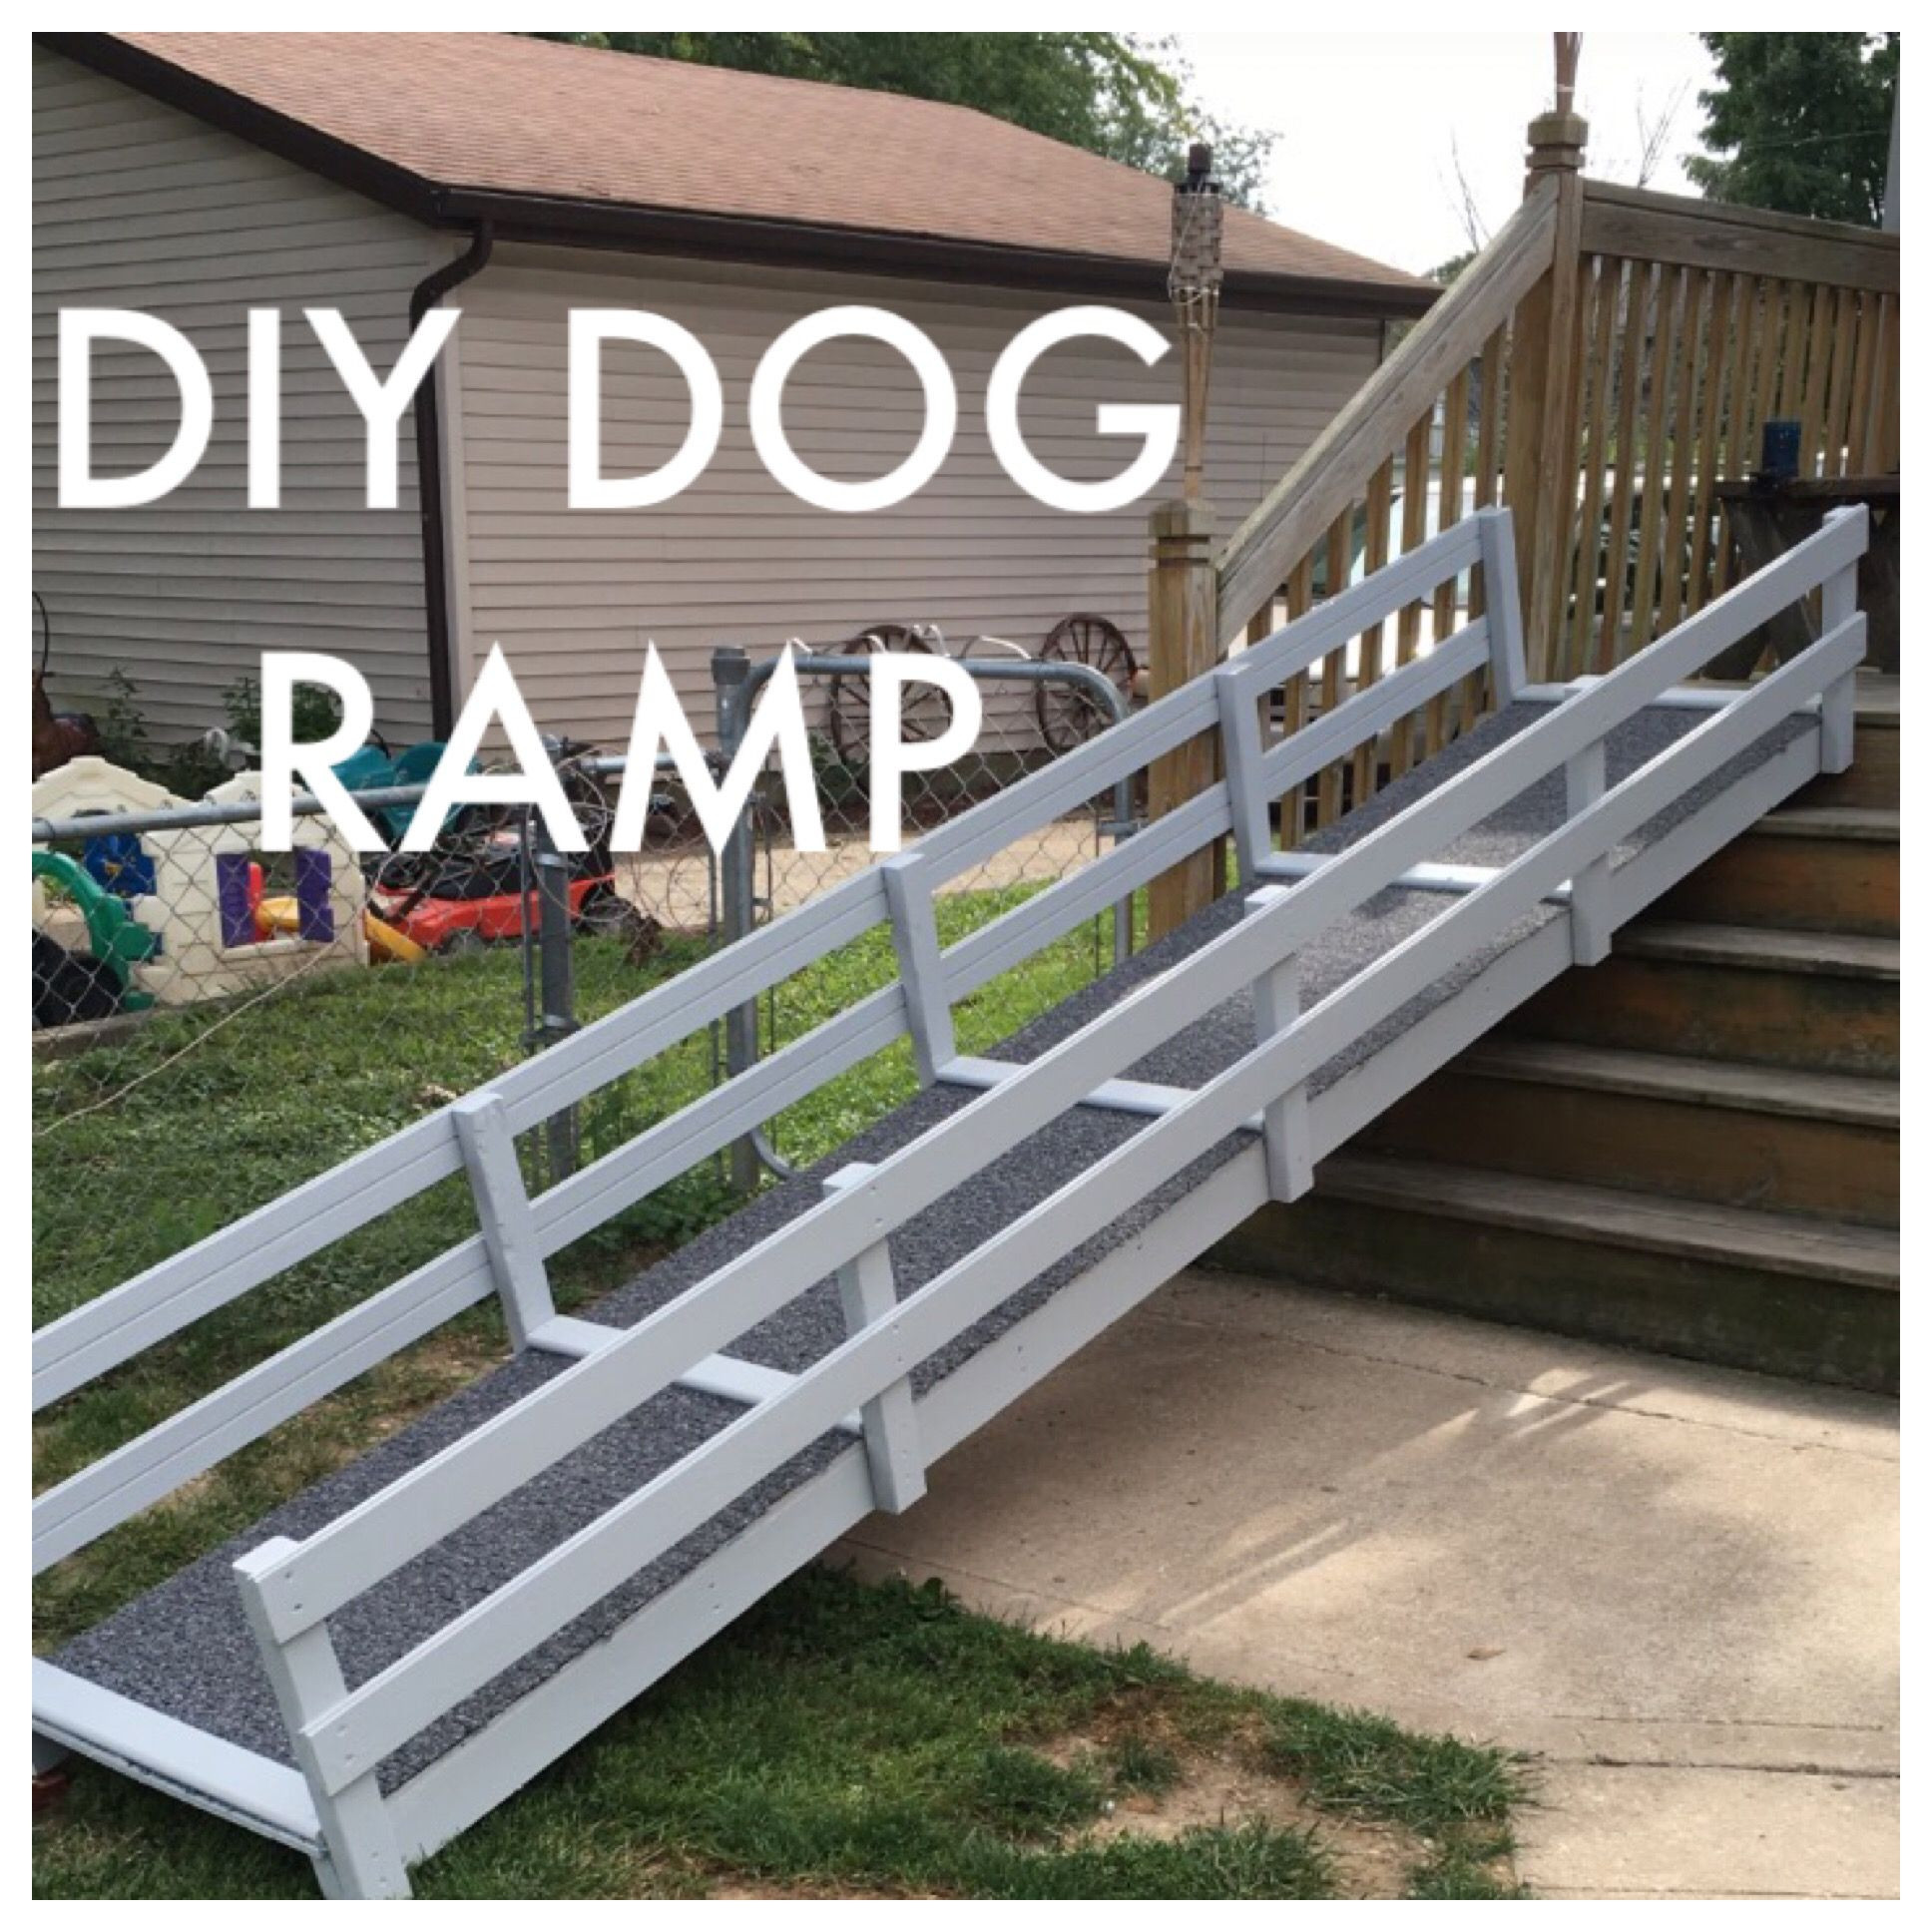 DIY Dog Ramp For Stairs
 Image result for diy dog ramp